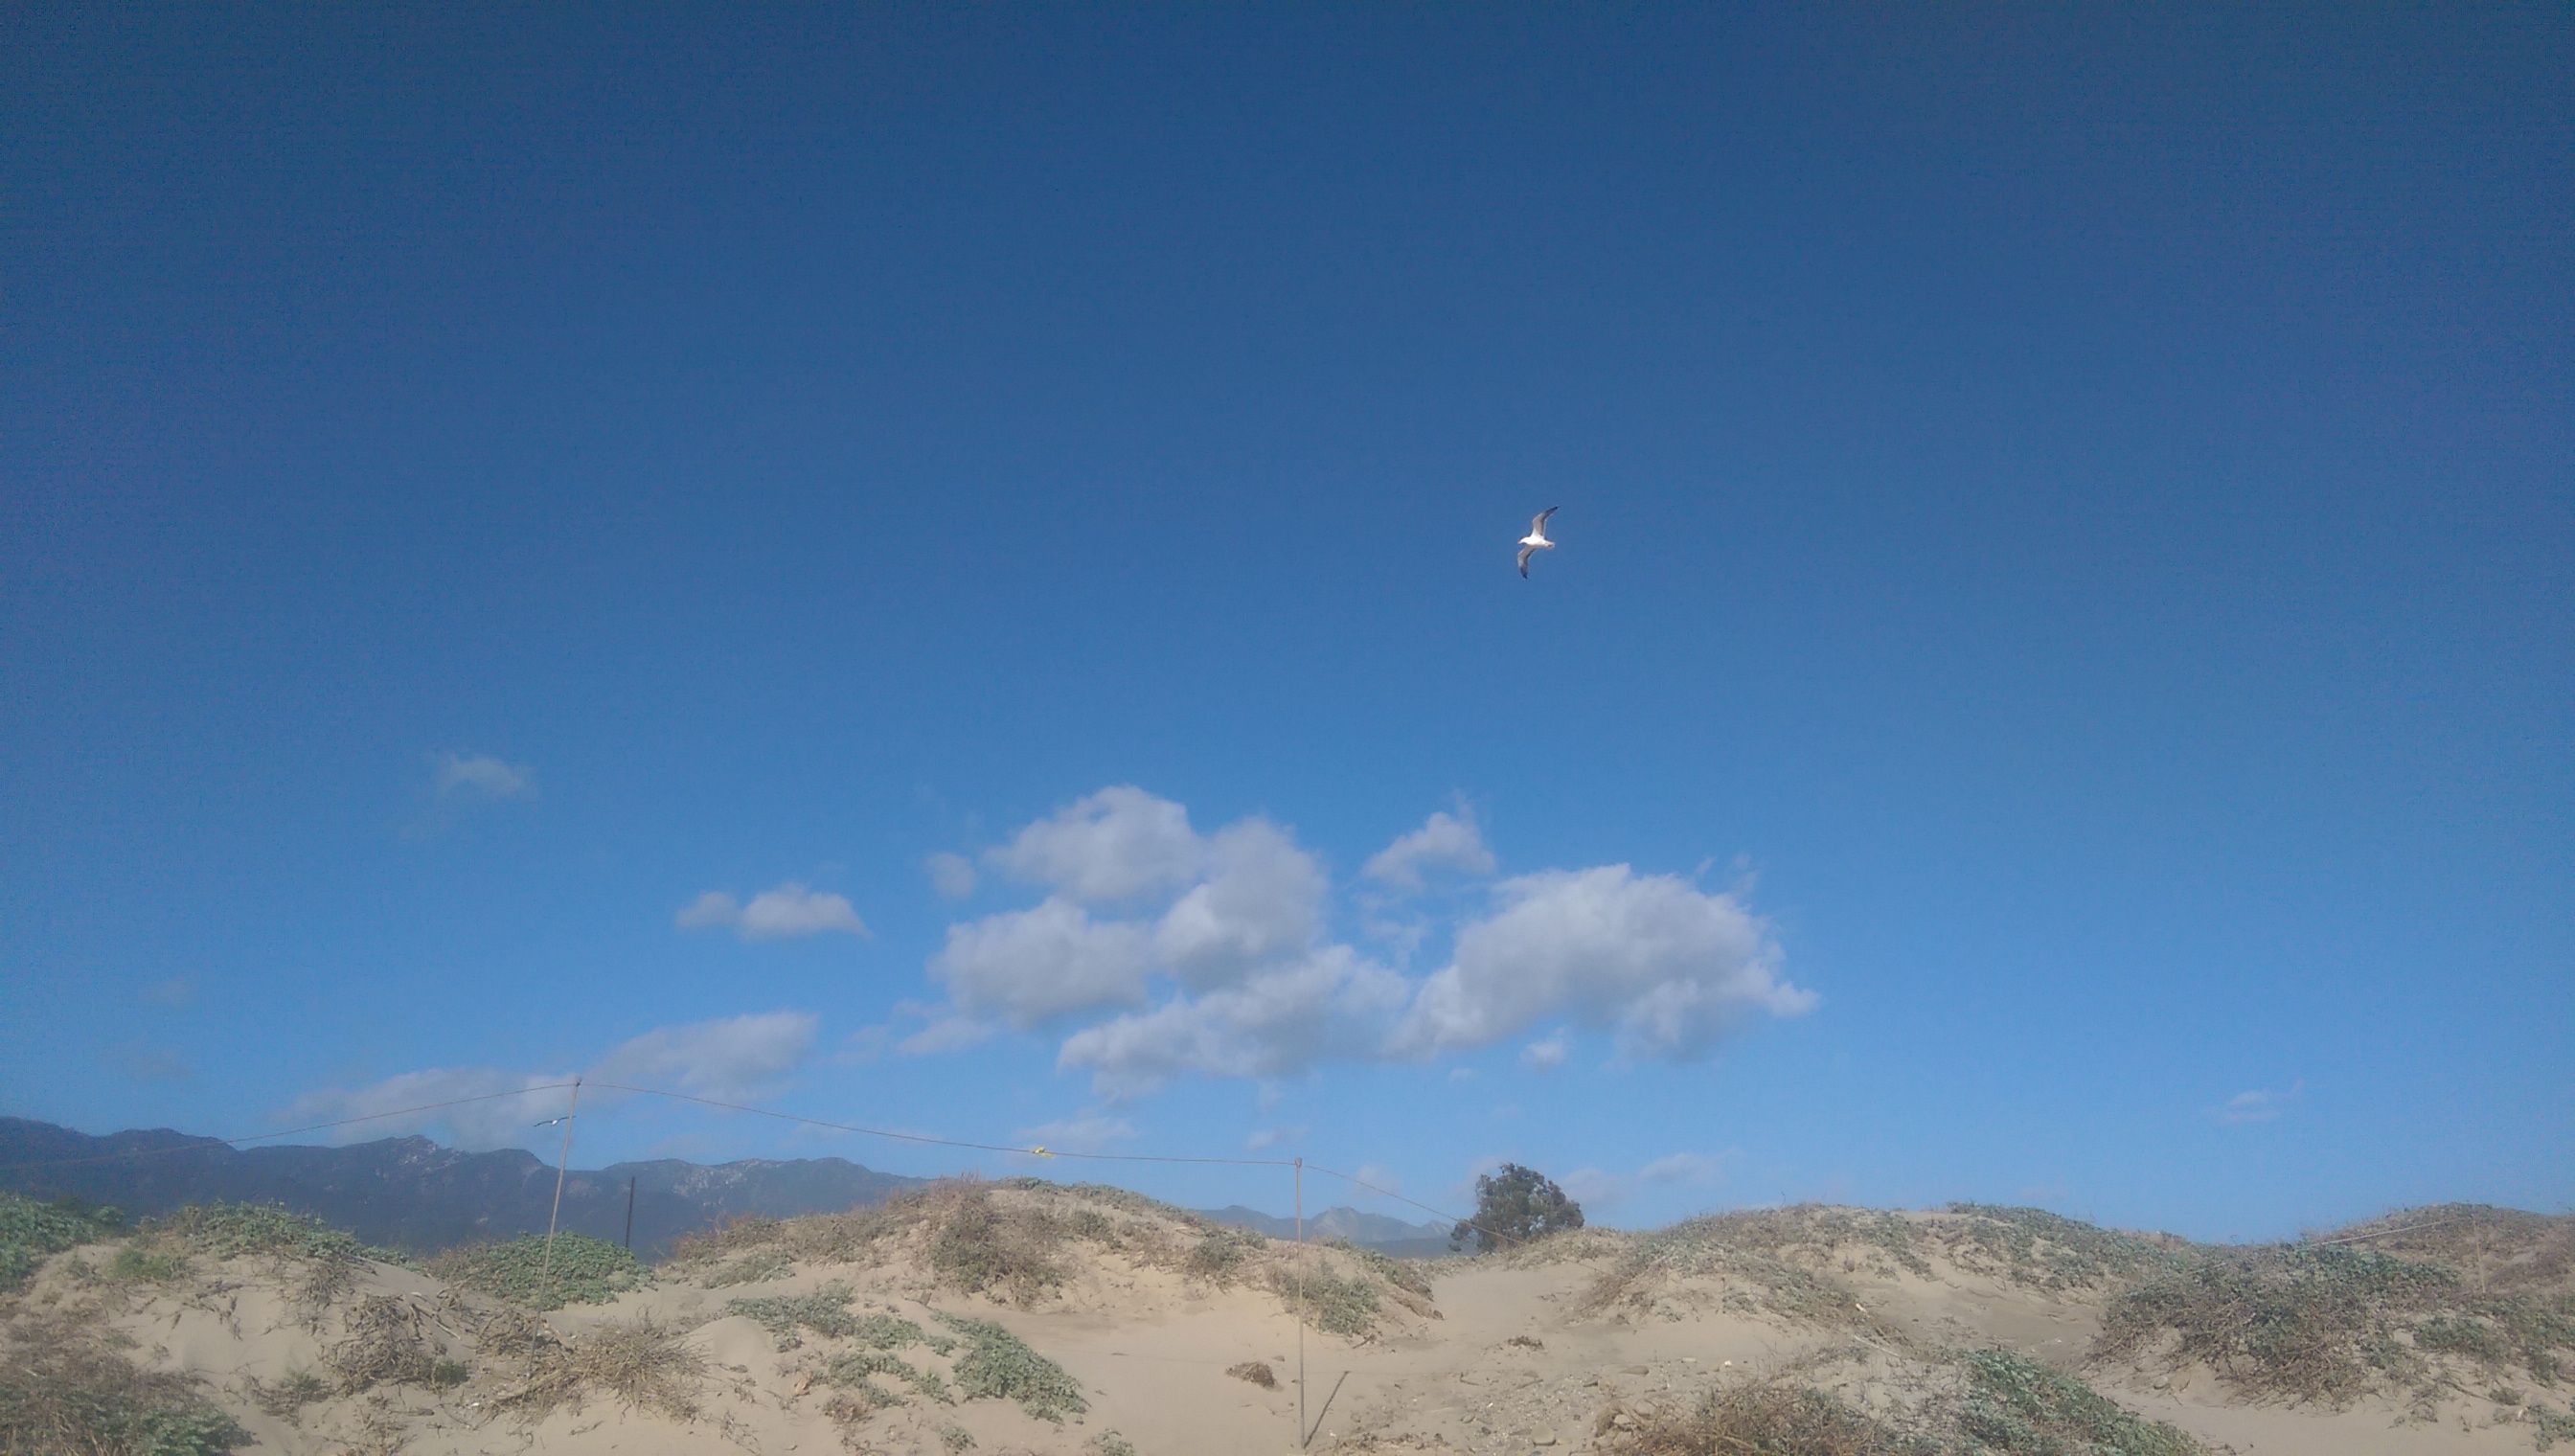 /zh-cn/posts/2016/03/spring-break-in-california/on-thre-roads/beach-seagull.jpg